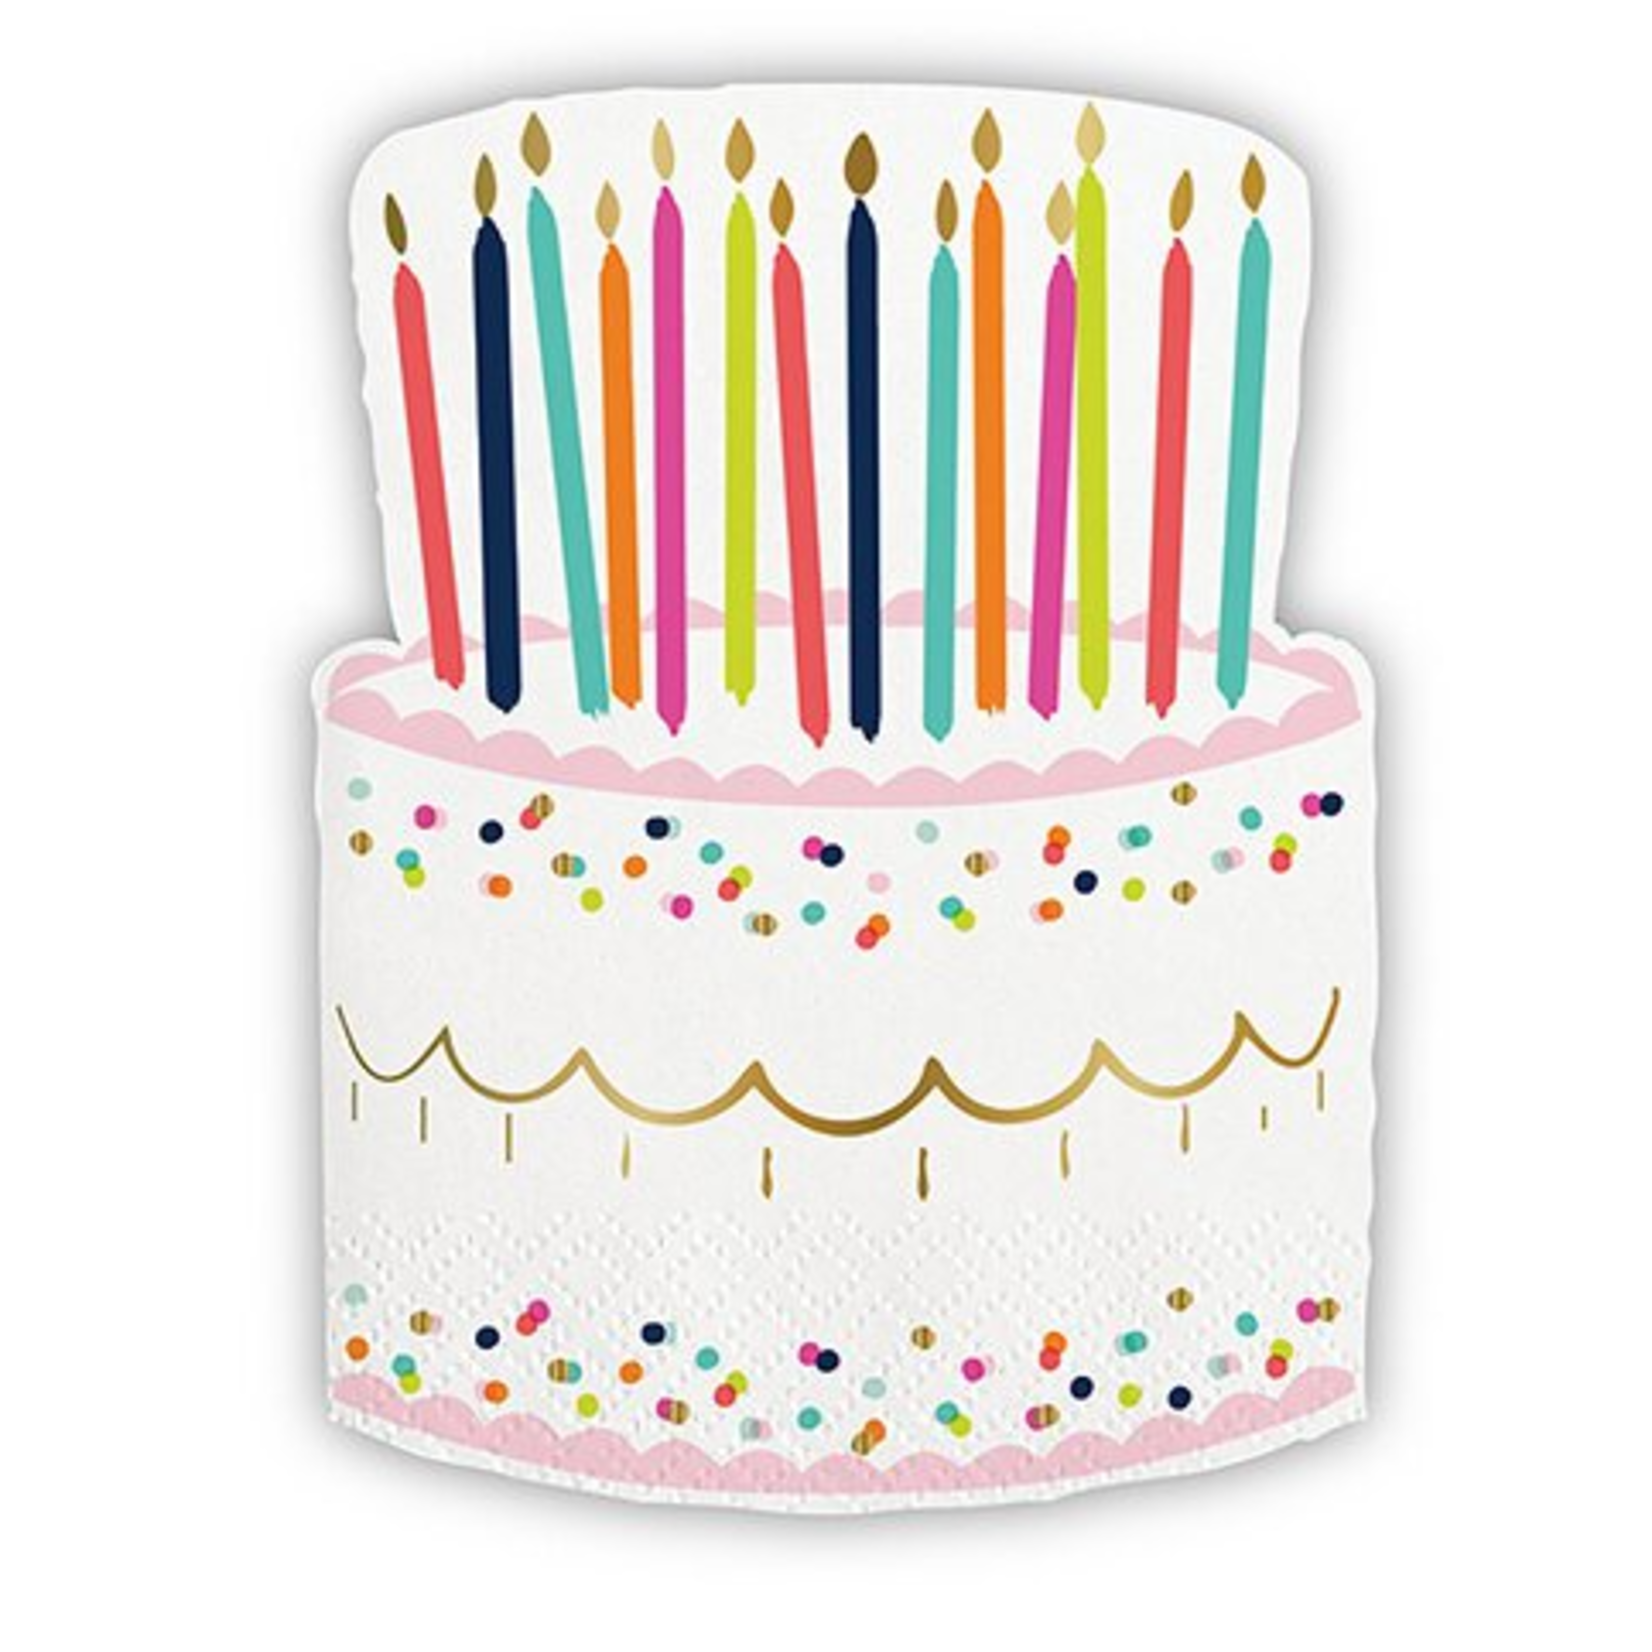 creative brands Birthday Cake Napkins - 20 count